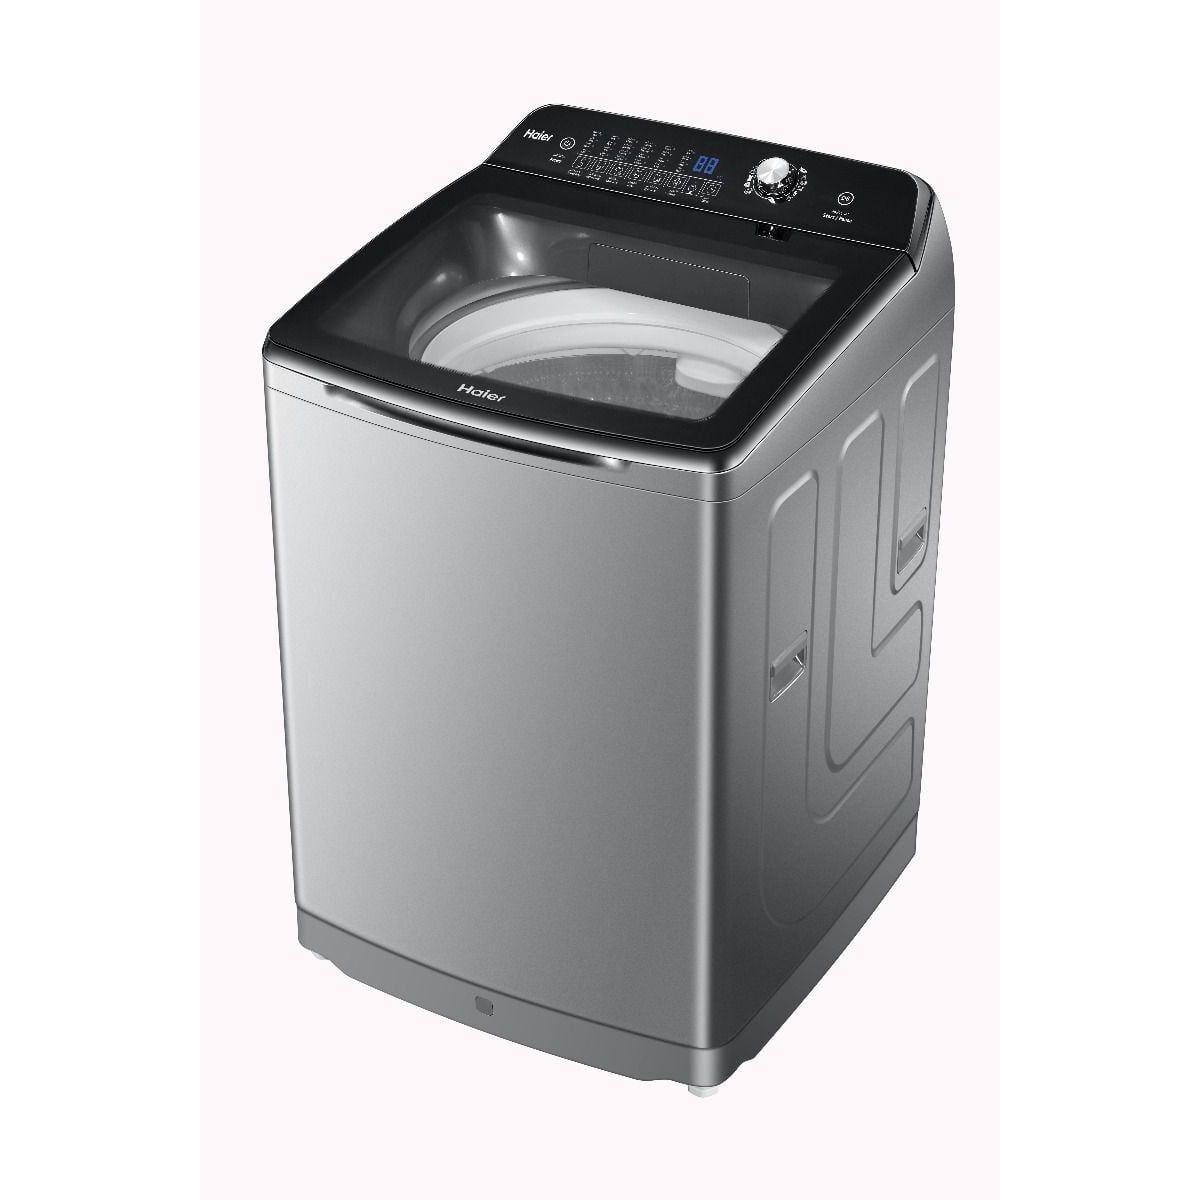 Haier Top Loading Washing Machine, 14 kg, Inverter, Silver, HWM140-1678S